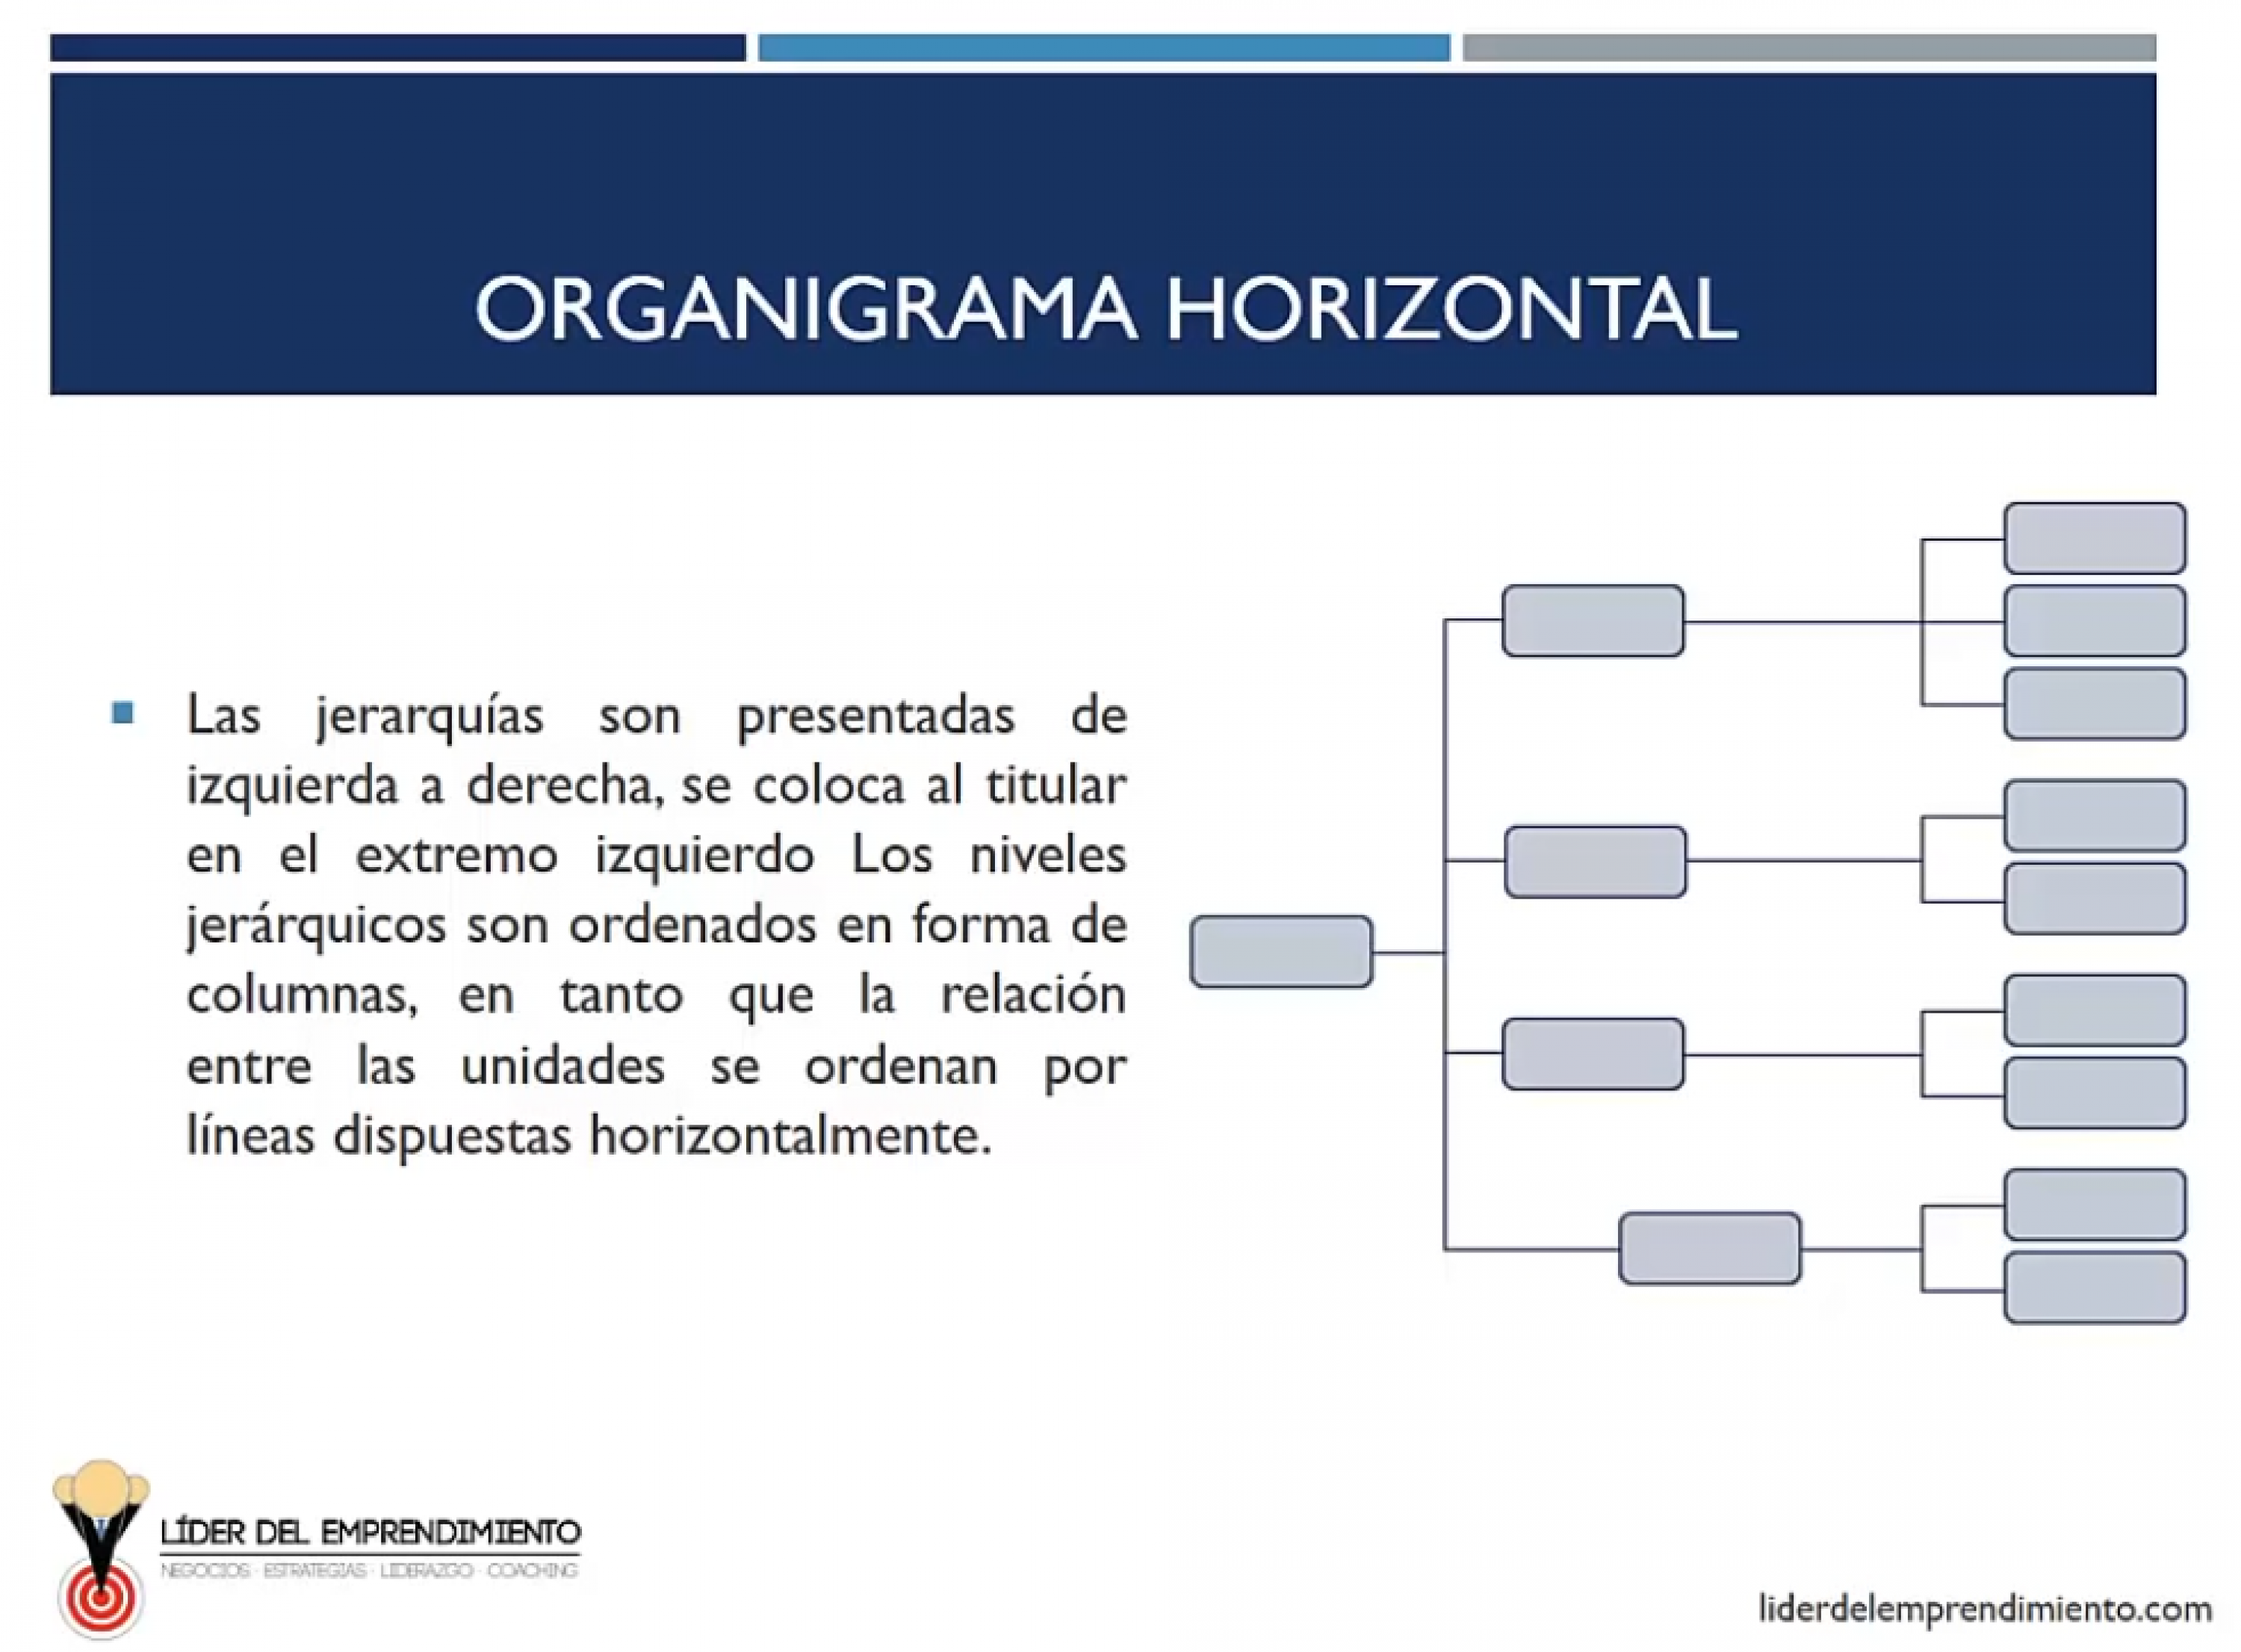 Organigrama horizontal